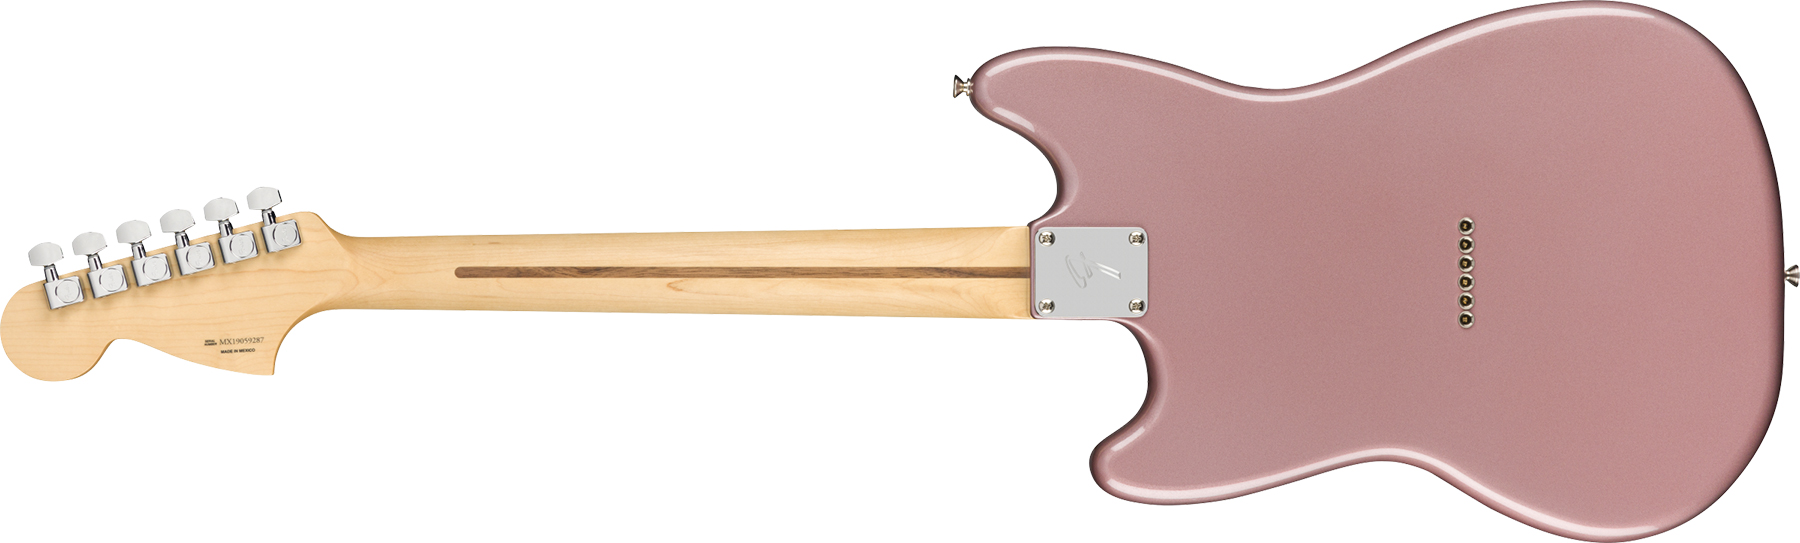 Fender Mustang Player 90 Mex Ht 2p90 Pf - Burgundy Mist Metallic - Retro-Rock-E-Gitarre - Variation 1